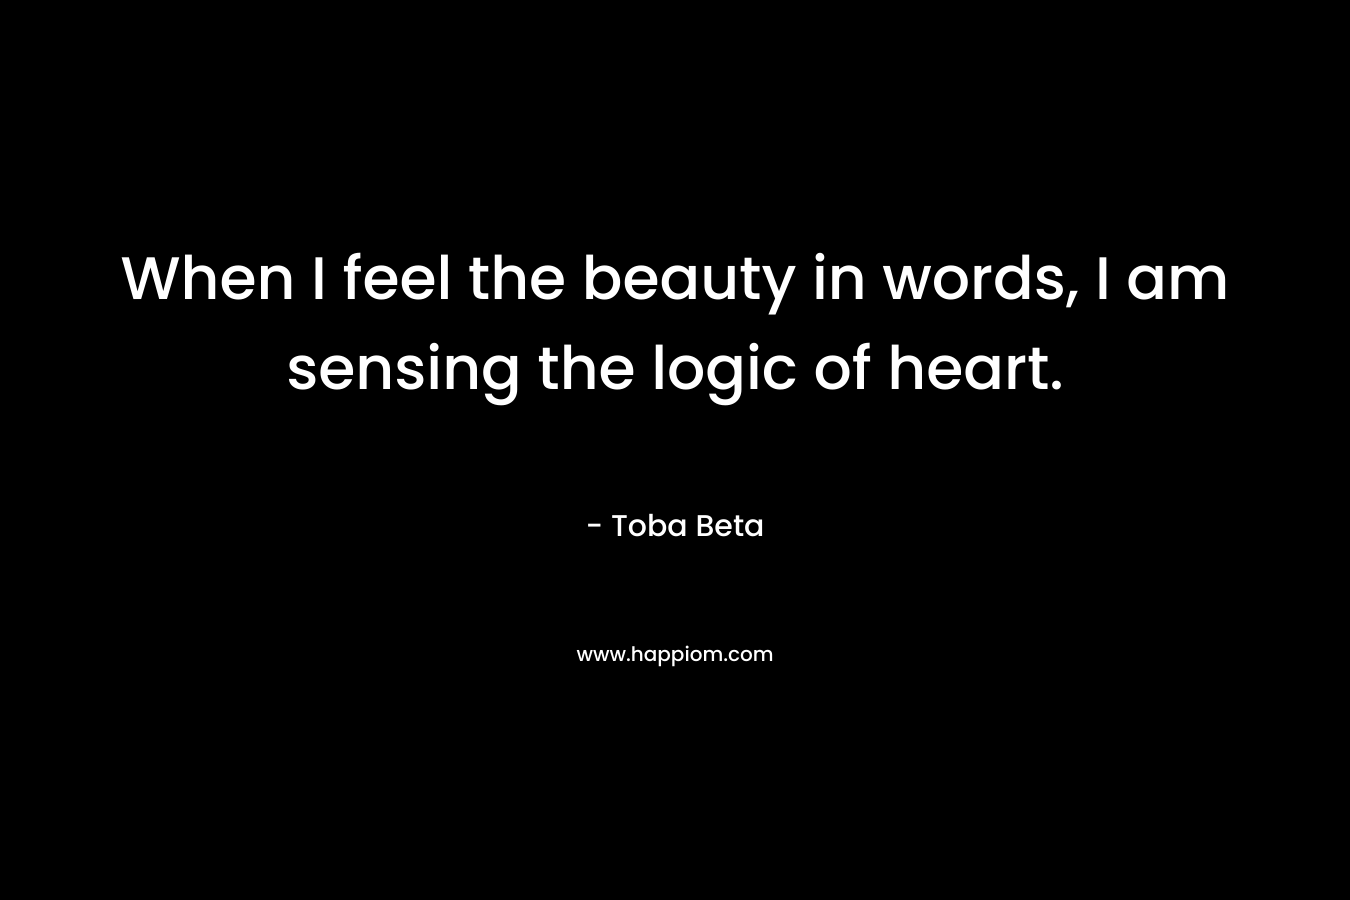 When I feel the beauty in words, I am sensing the logic of heart.